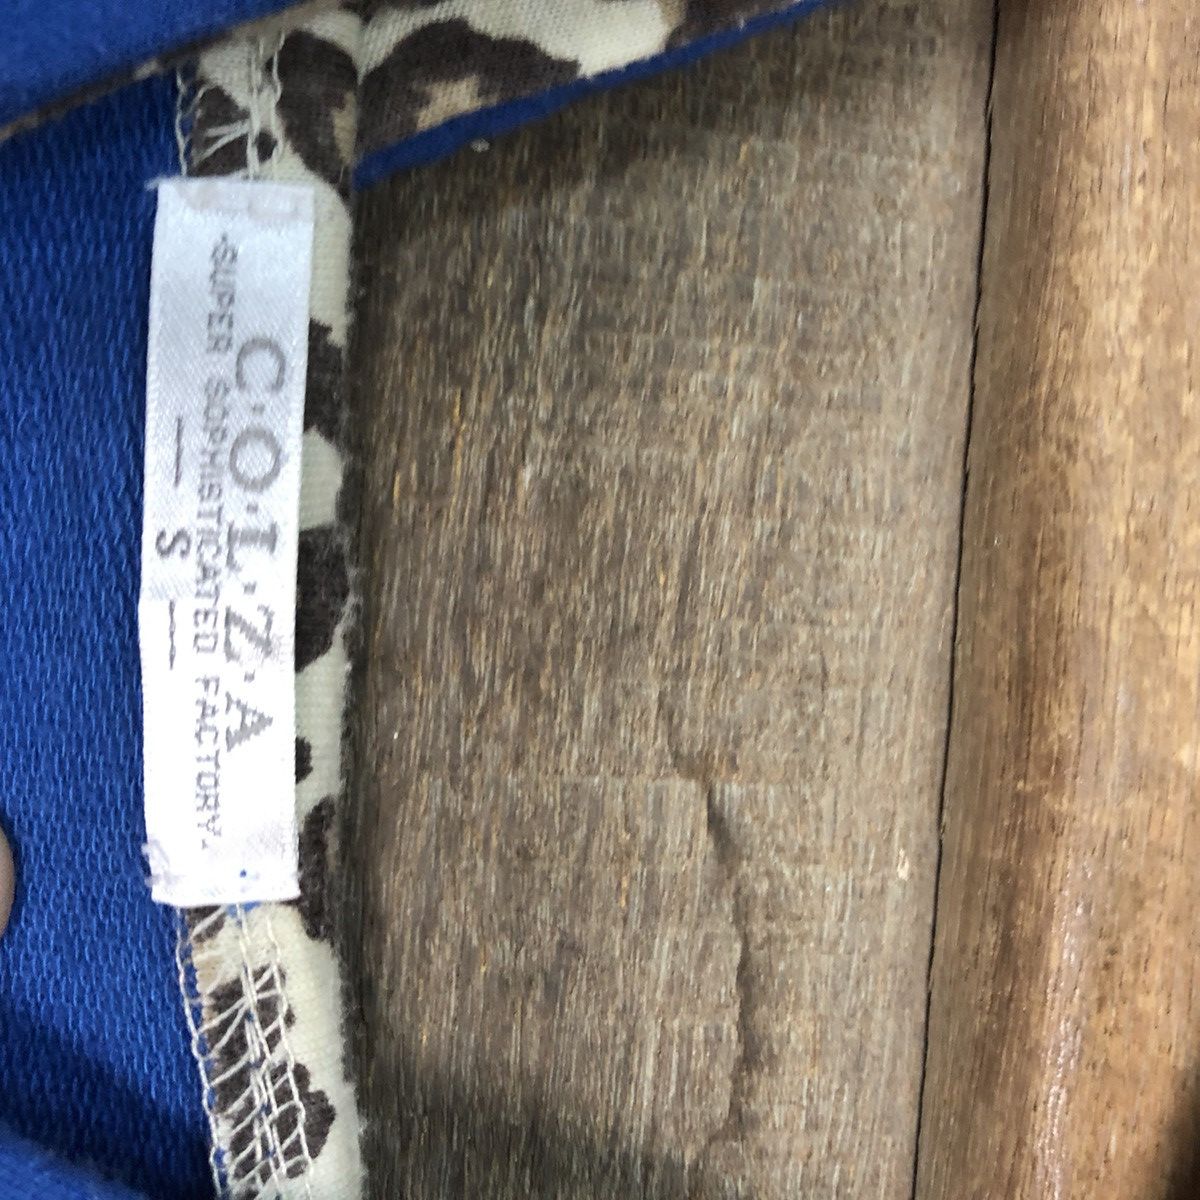 Japanese Brand Colza Brad Blue sweater ear Hoodies #5598 Size S / US 4 / IT 40 - 12 Thumbnail